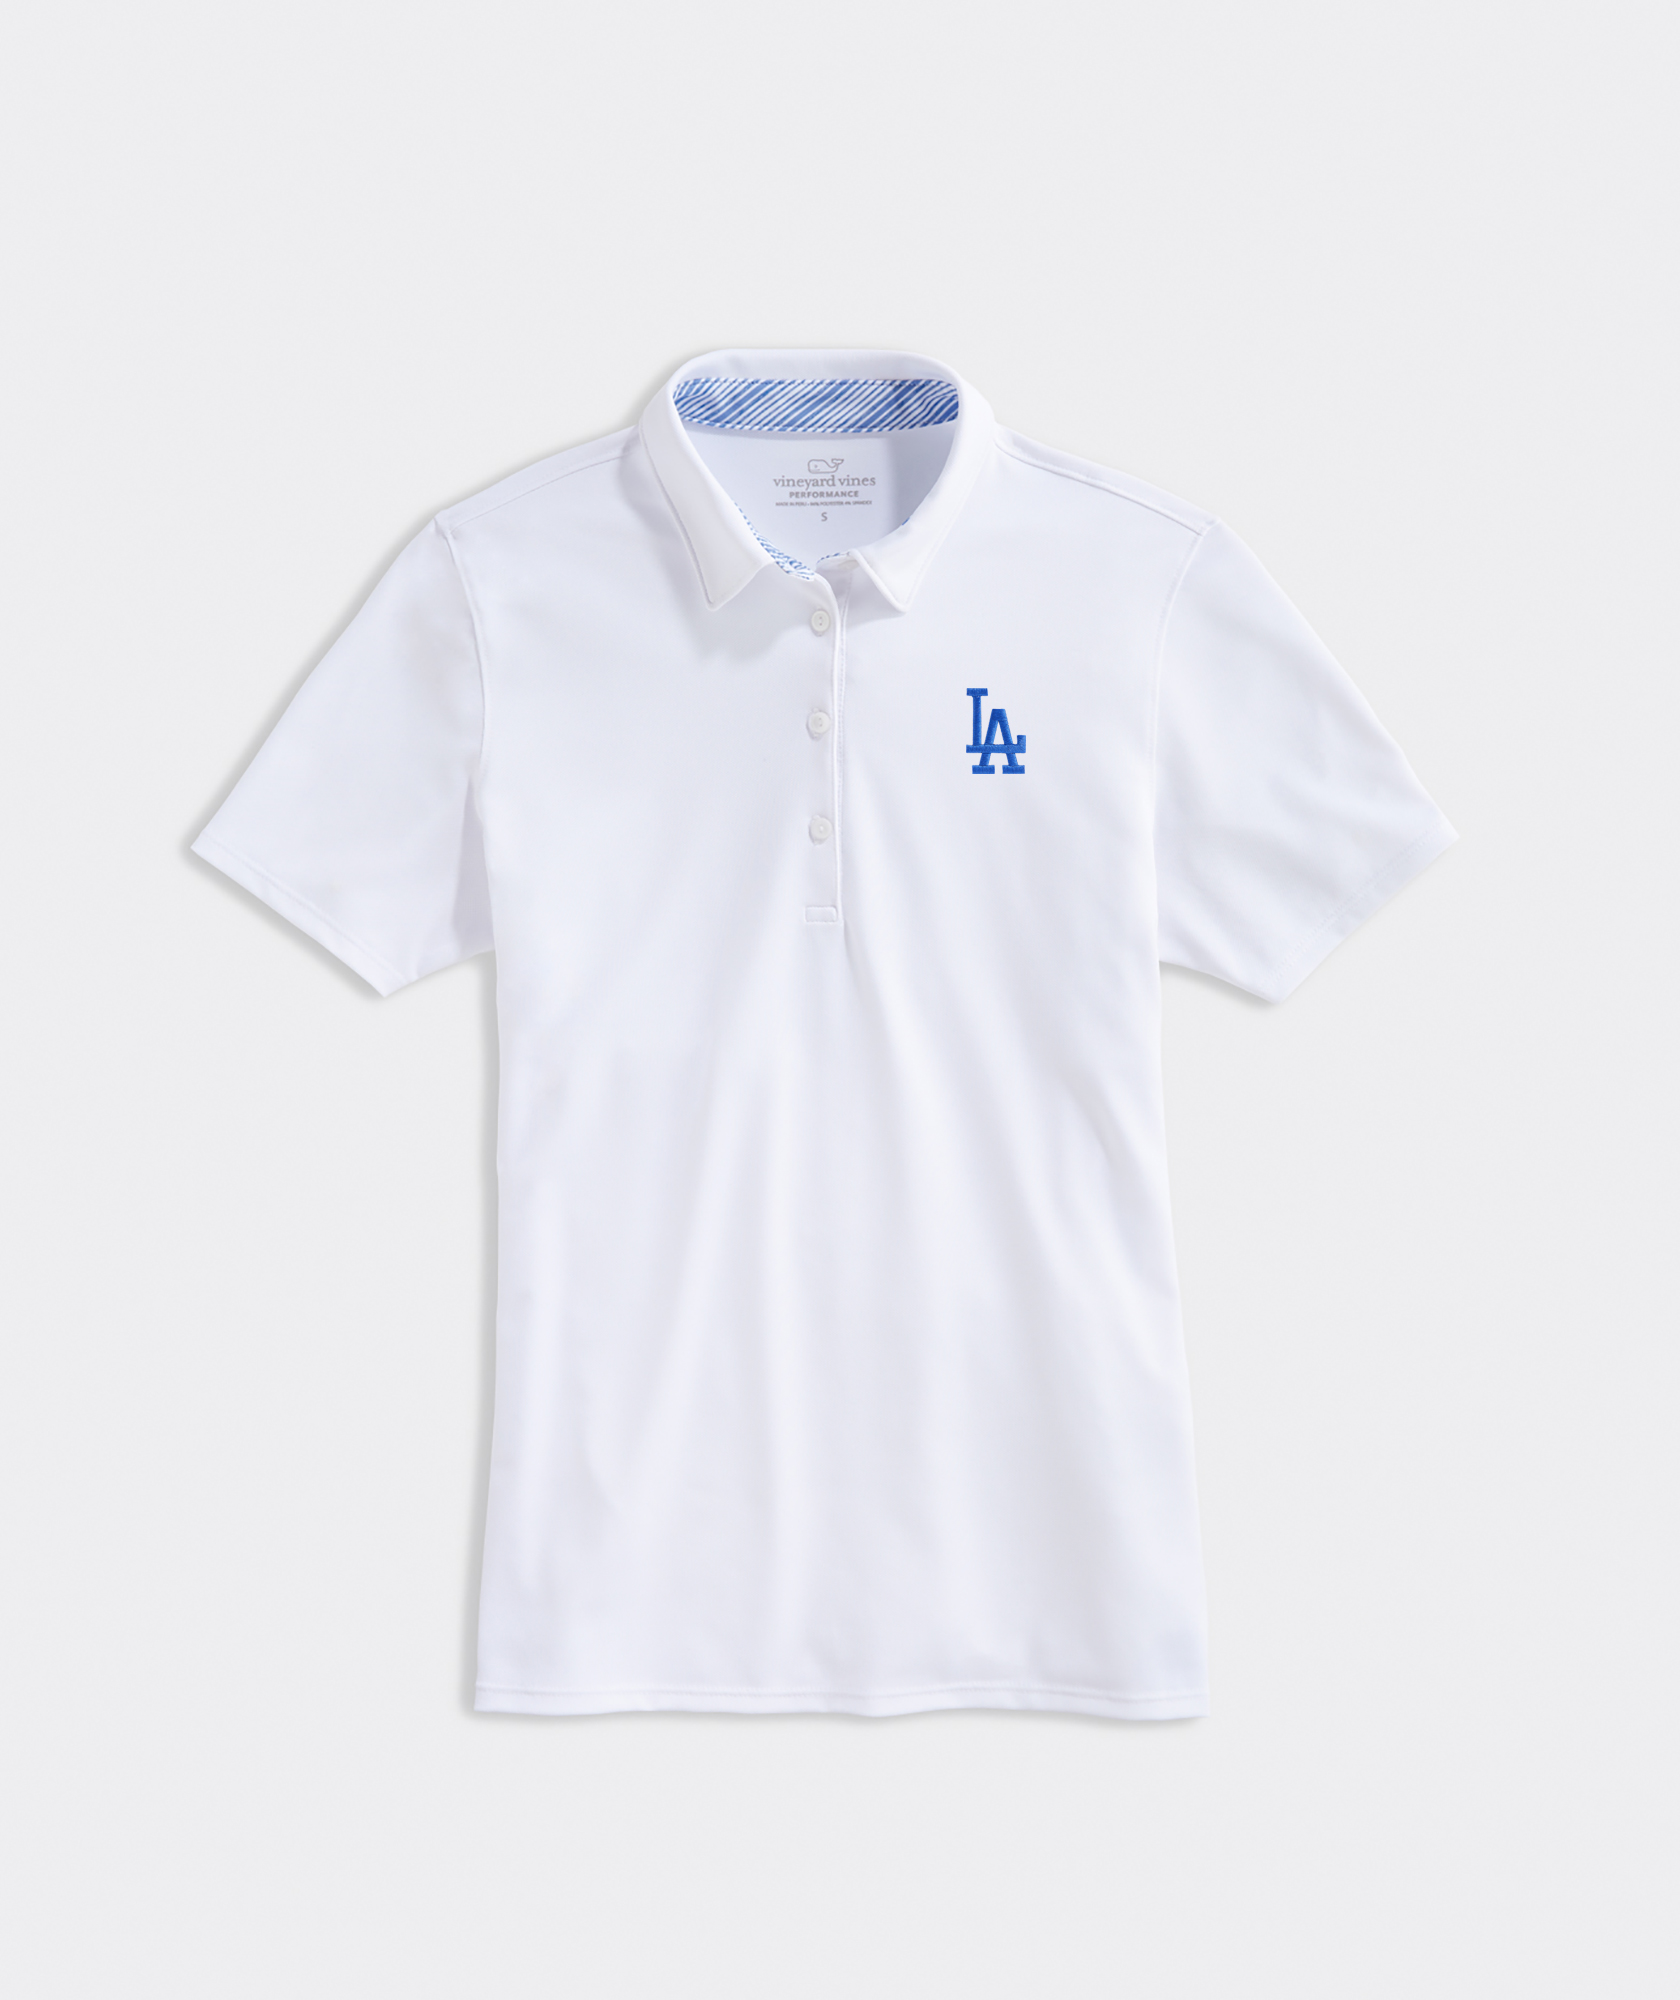 Vineyard Vines Los Angeles Dodgers Shirt Womens XL White Blue Long